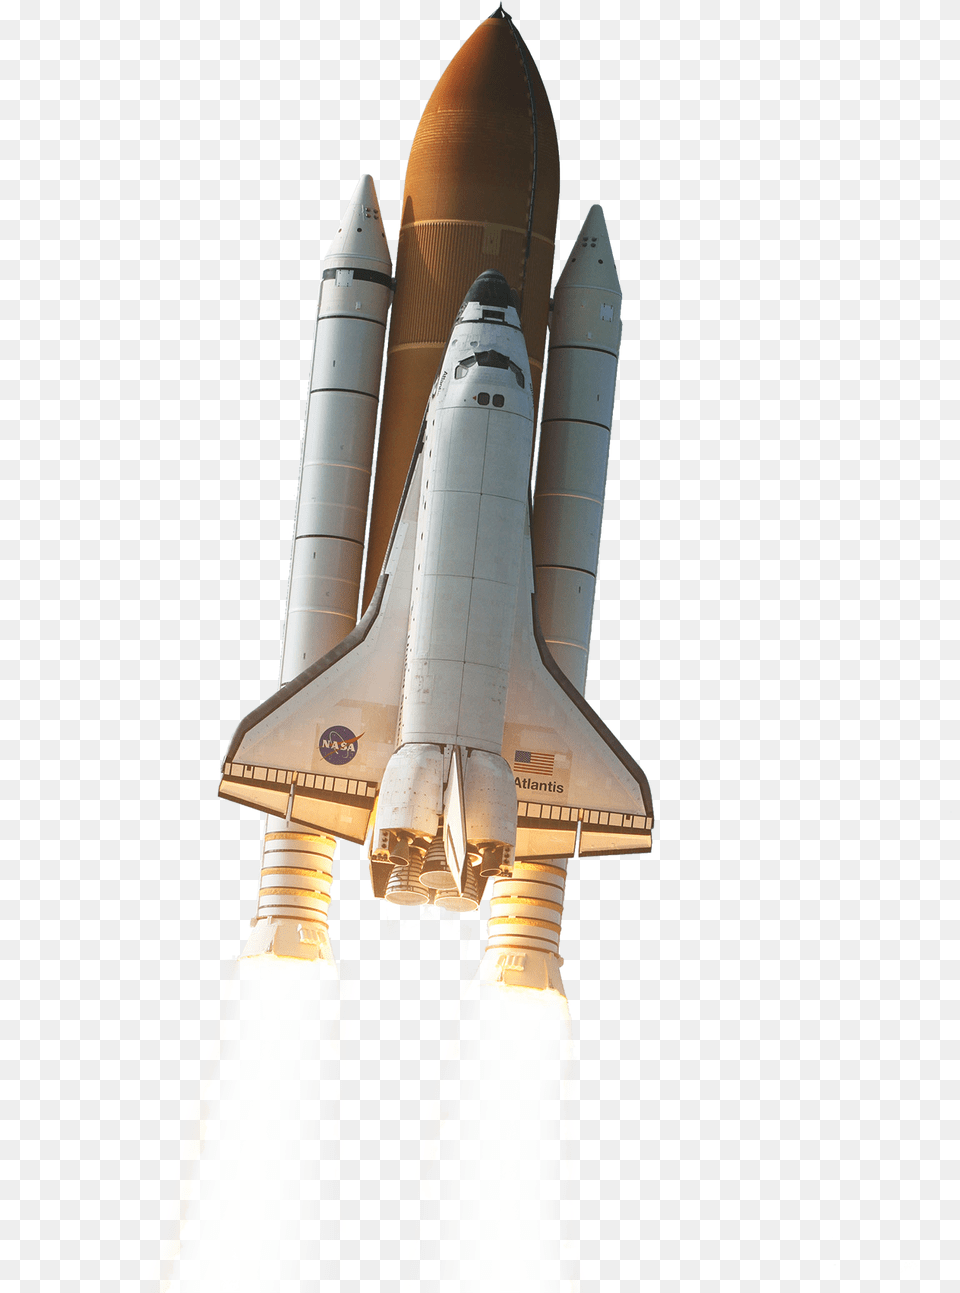 Rocket Image Arts Transparent Background Spaceship, Aircraft, Transportation, Vehicle, Weapon Free Png Download